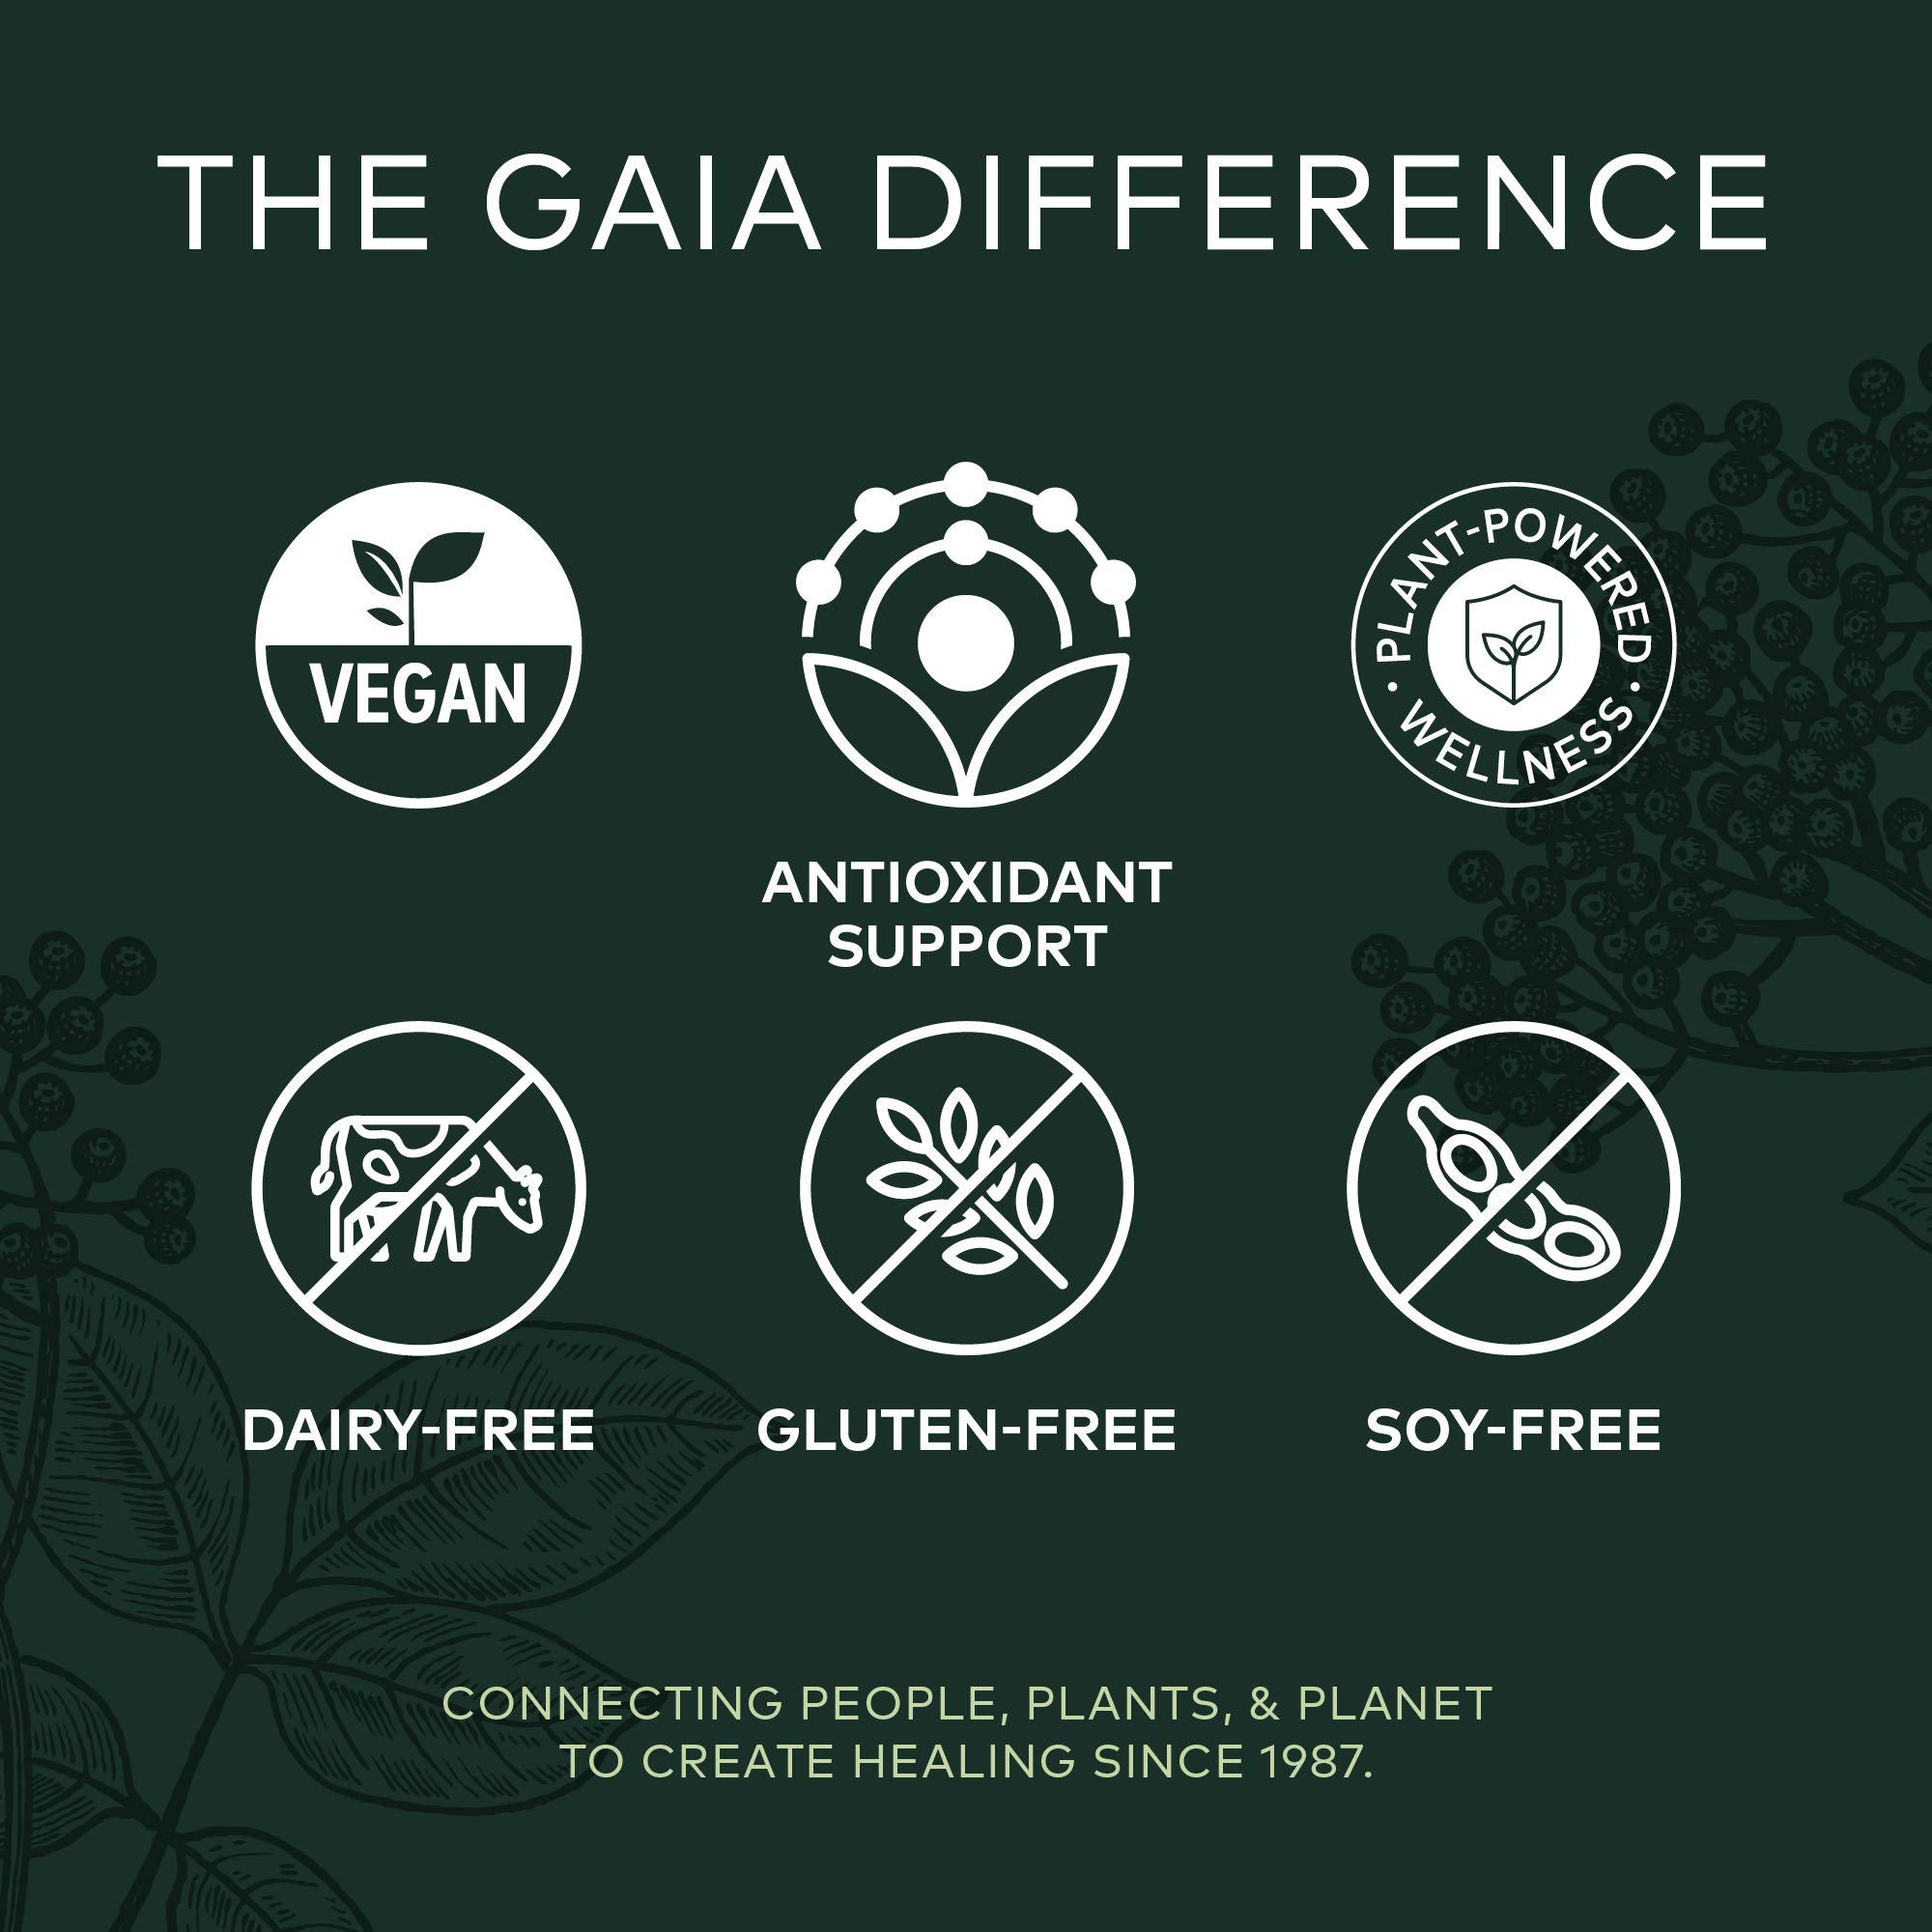 Gaia Herbs, Black Elderberry, Organic Sambucus Elderberry Extract for Daily Immune and Antioxidant Support, Vegan Powder Capsules, 60 Count